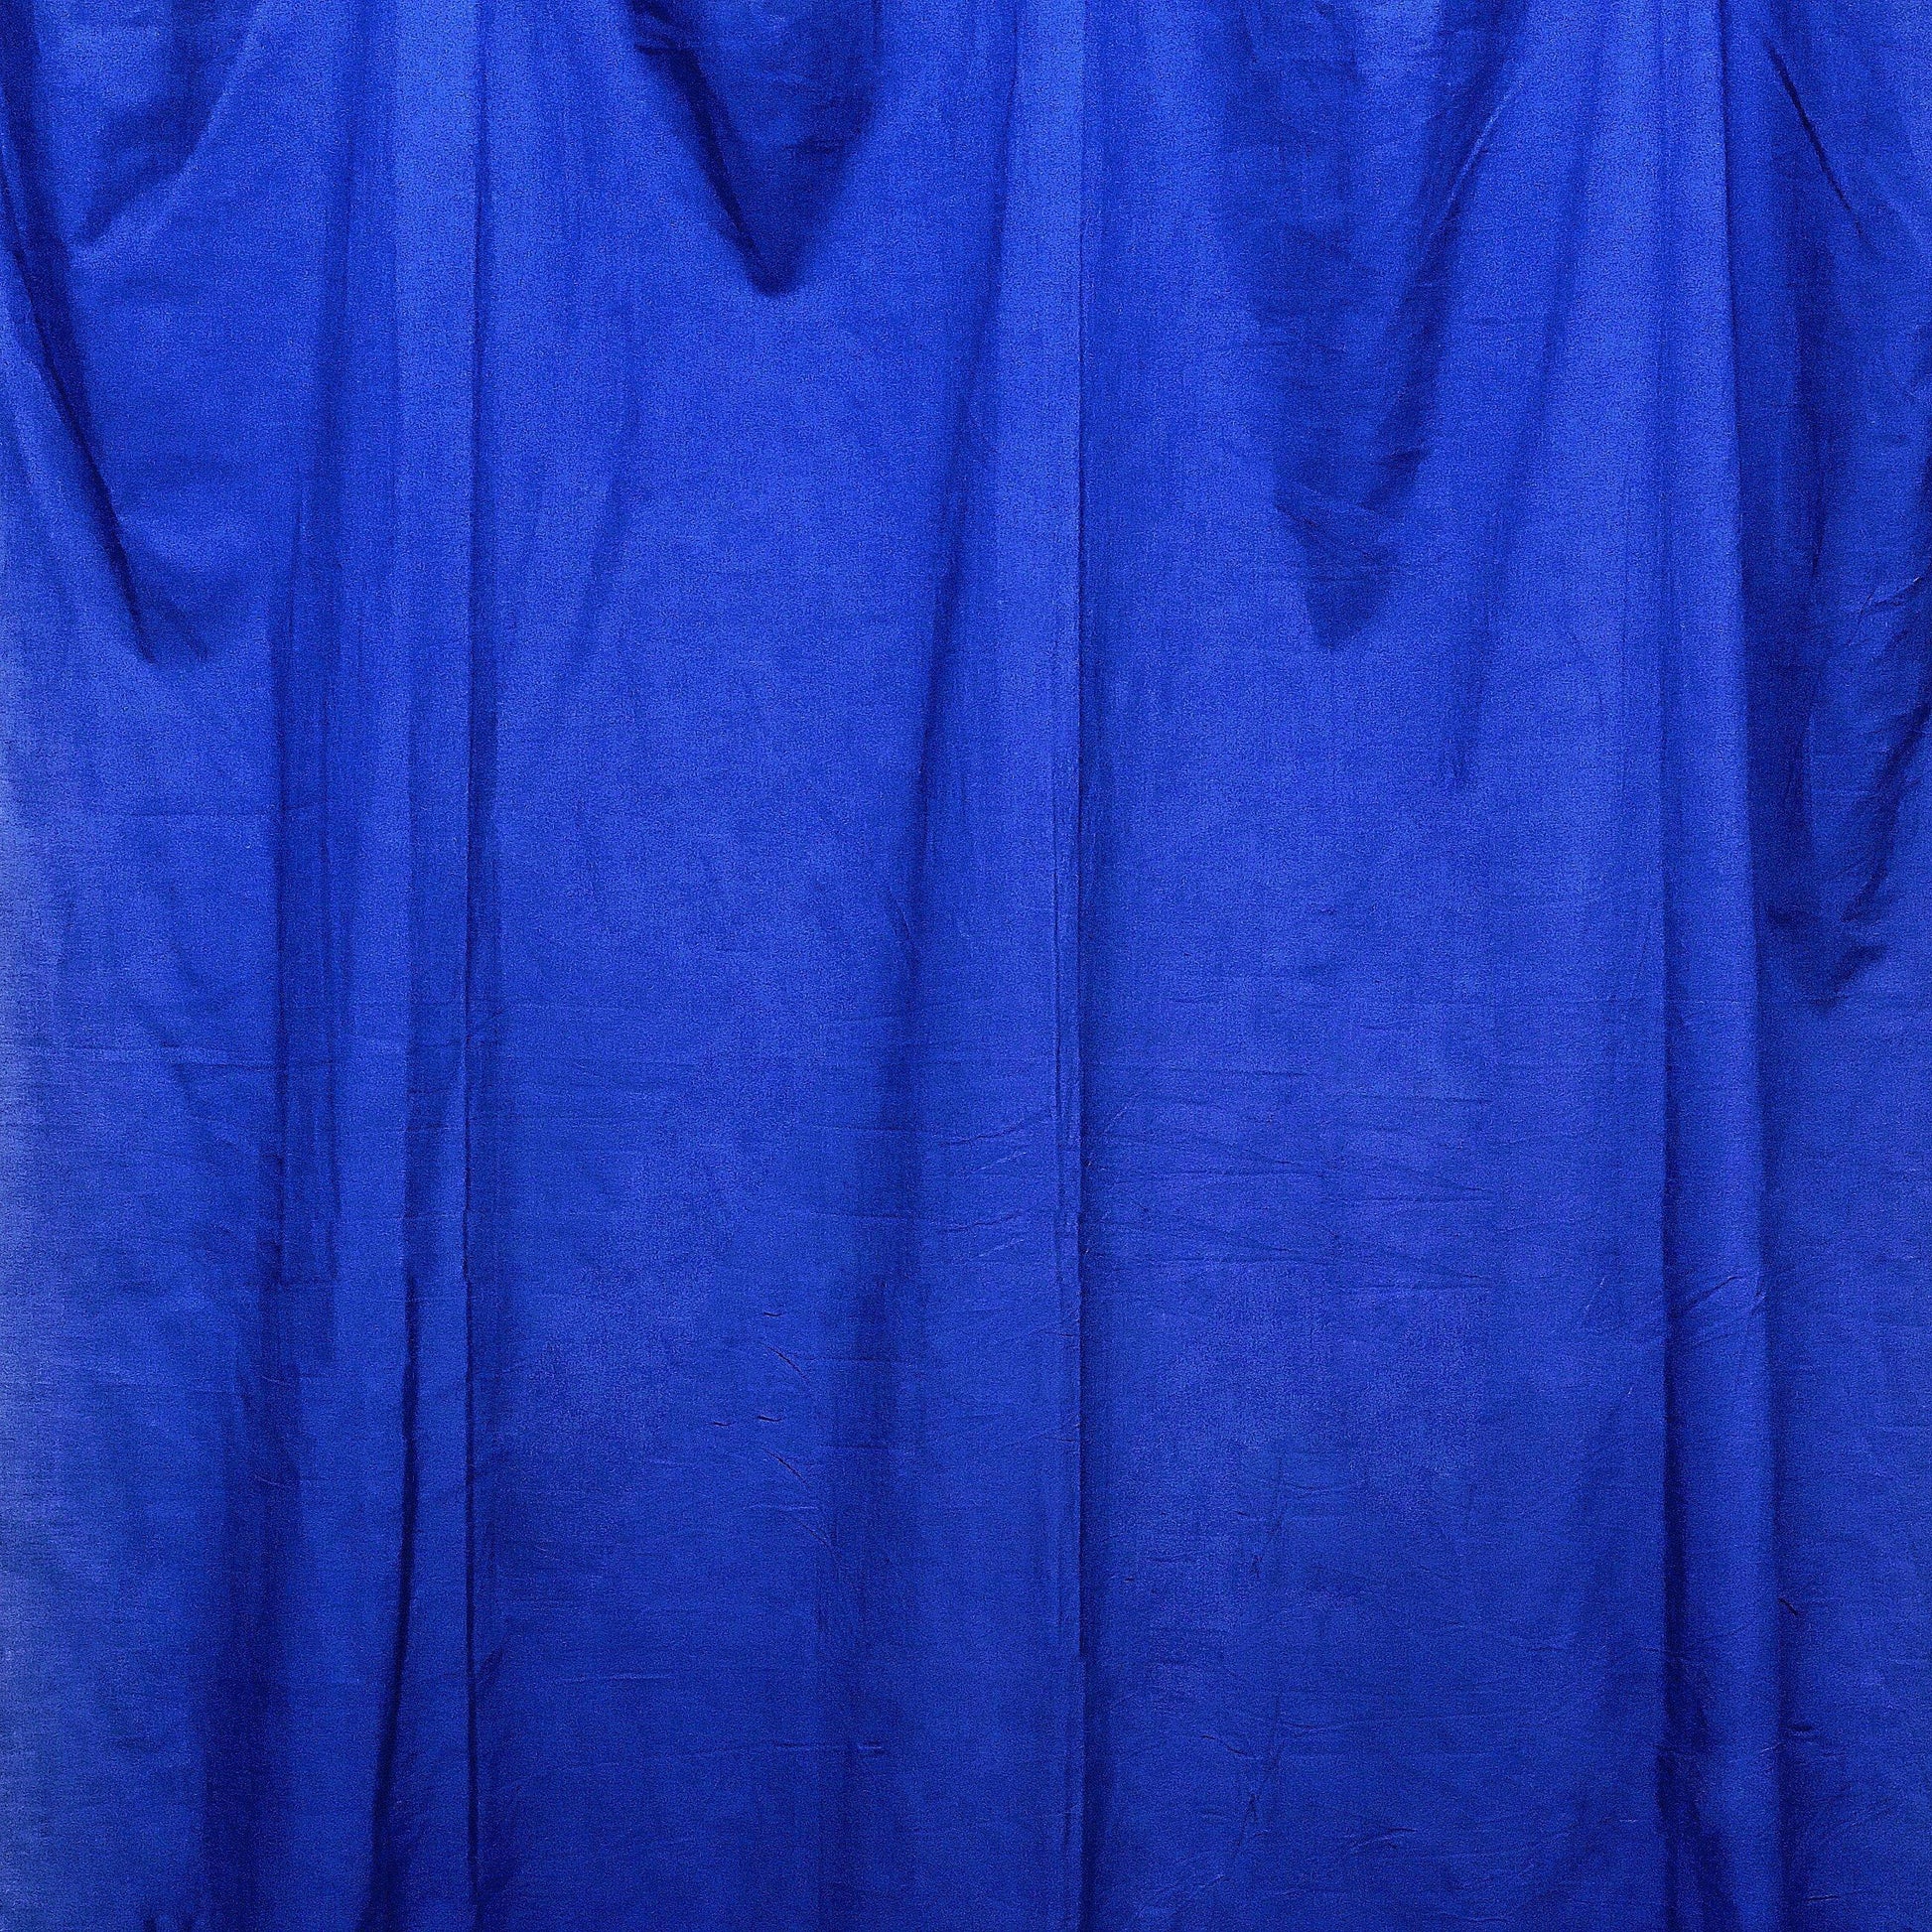 Royal blue Voile Curtain Pair - The Teal Thread